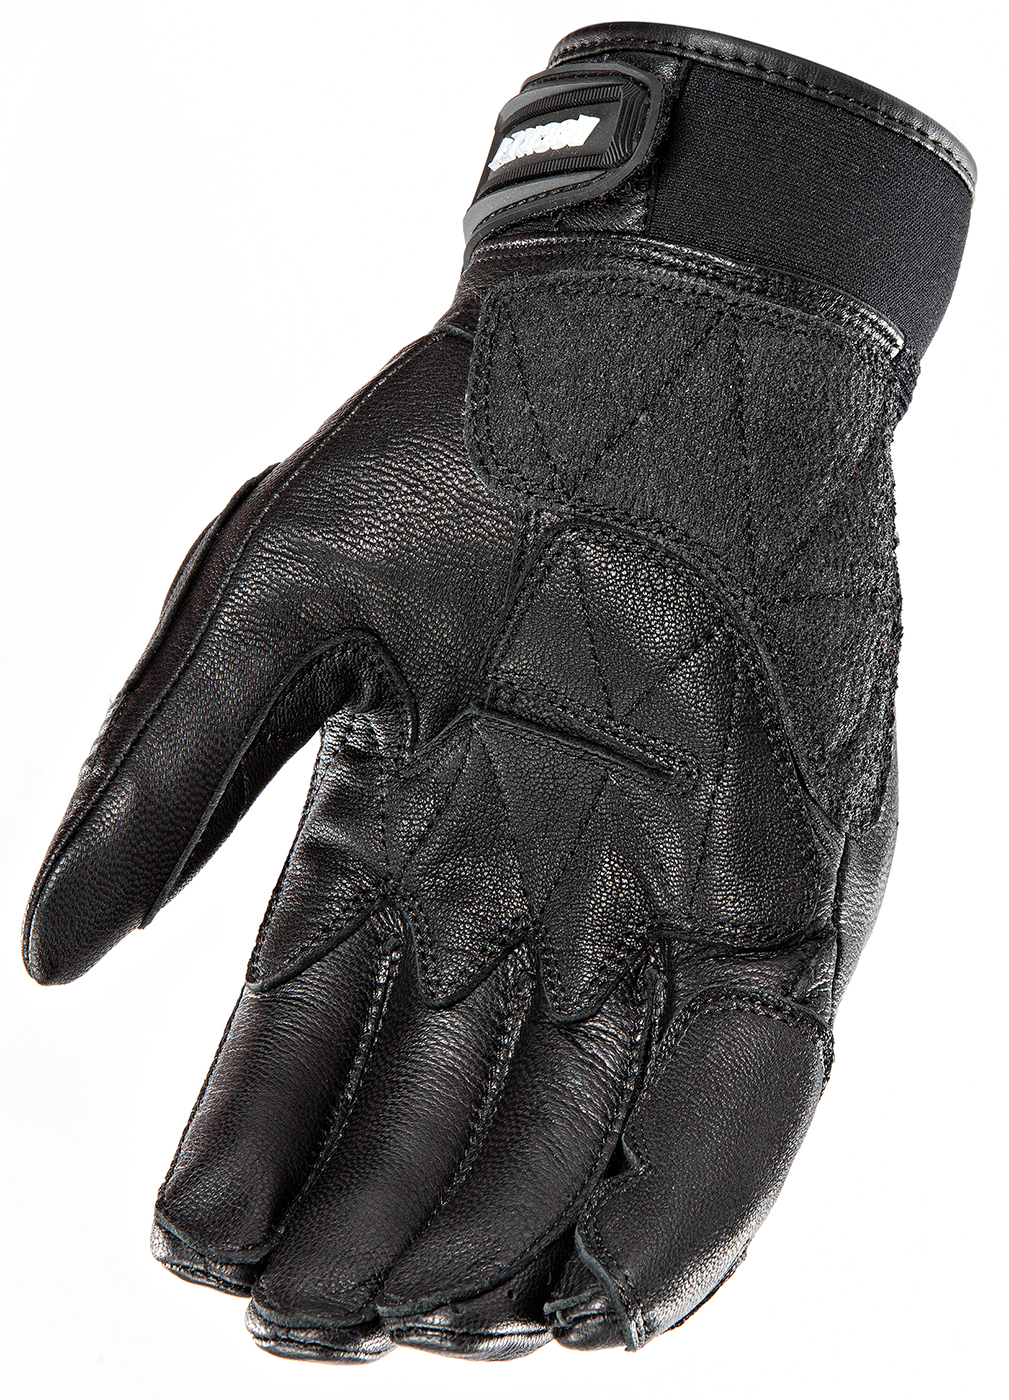 Joe Rocket Speedway Leather//Textile Motorcycle Gloves Black